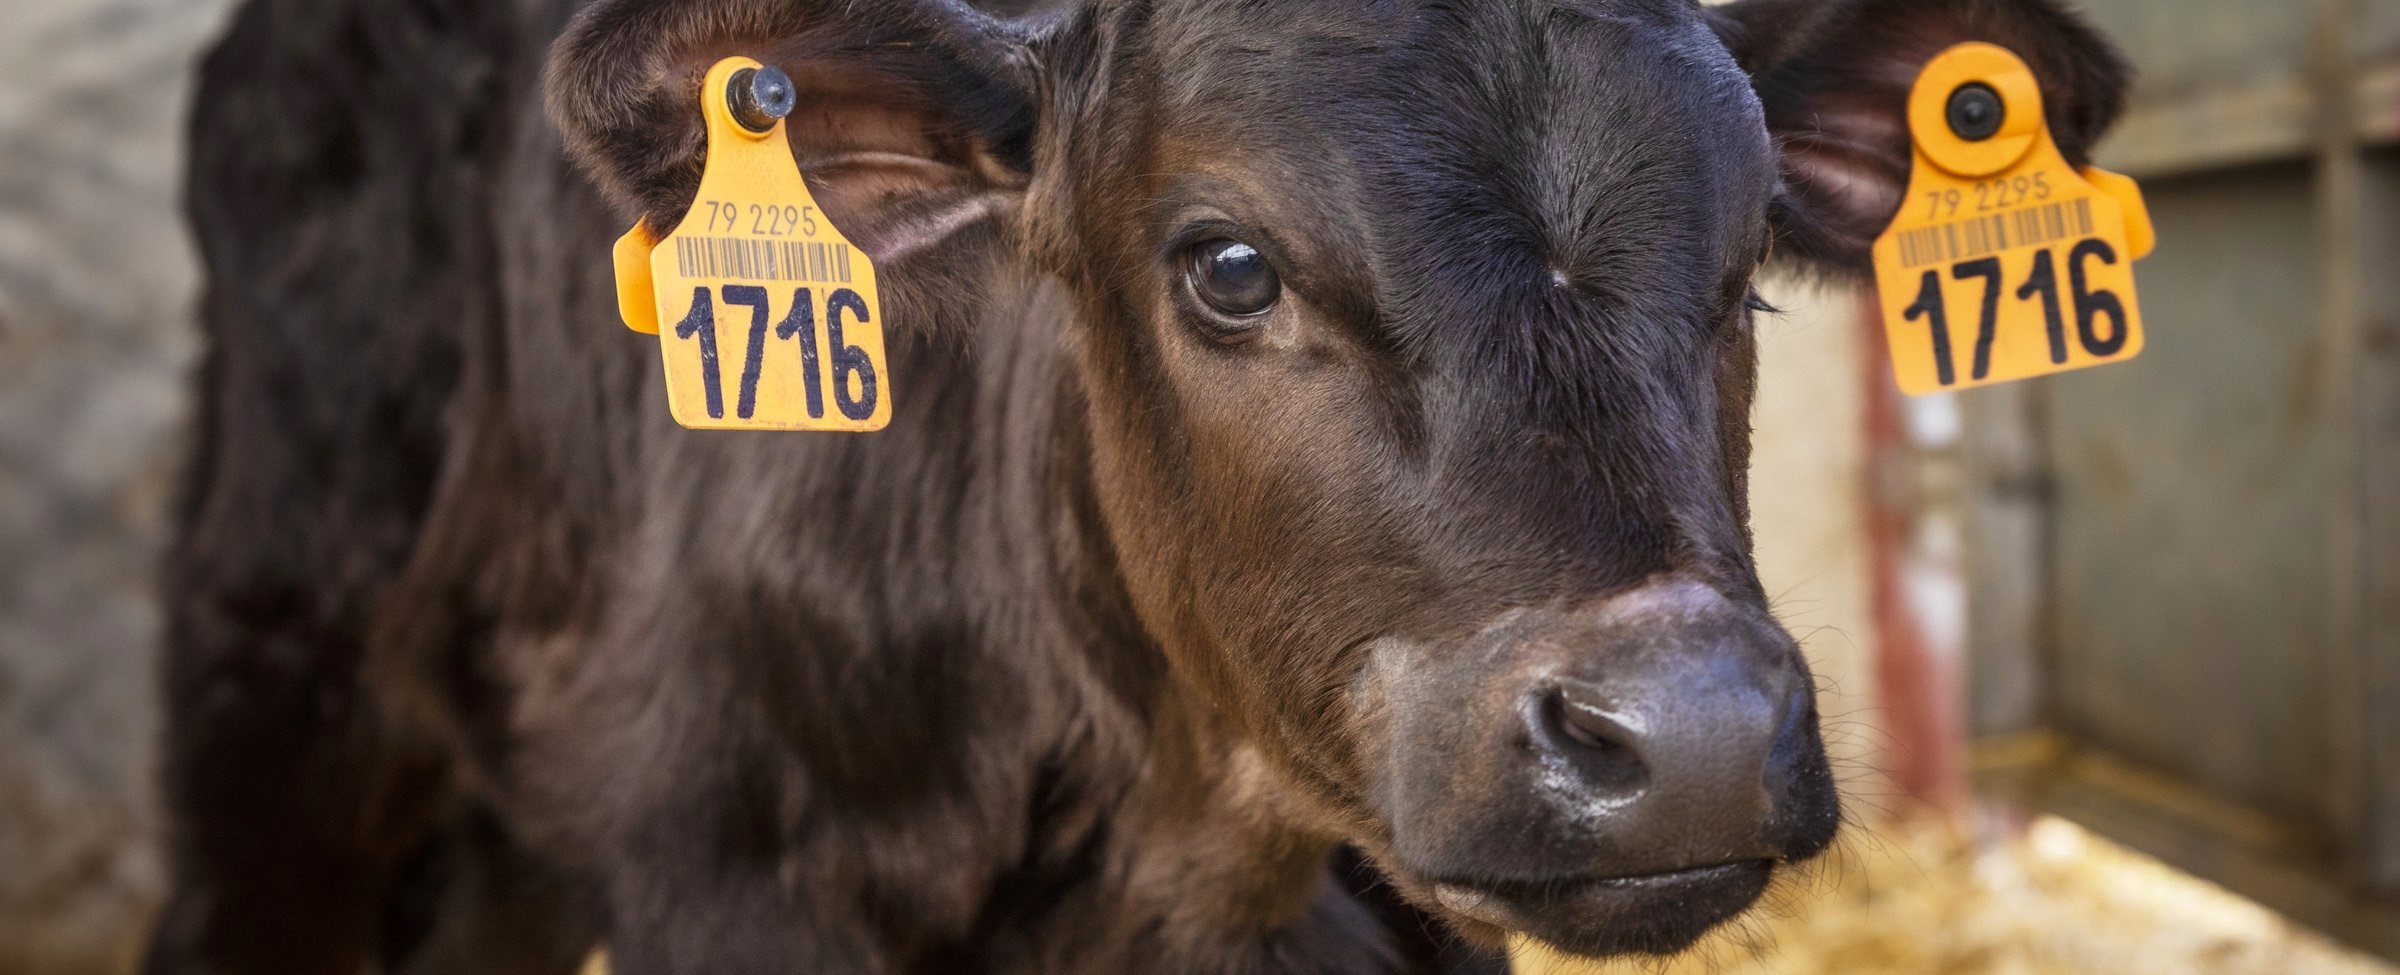 Controlling bovine respiratory disease (BRD) in calves